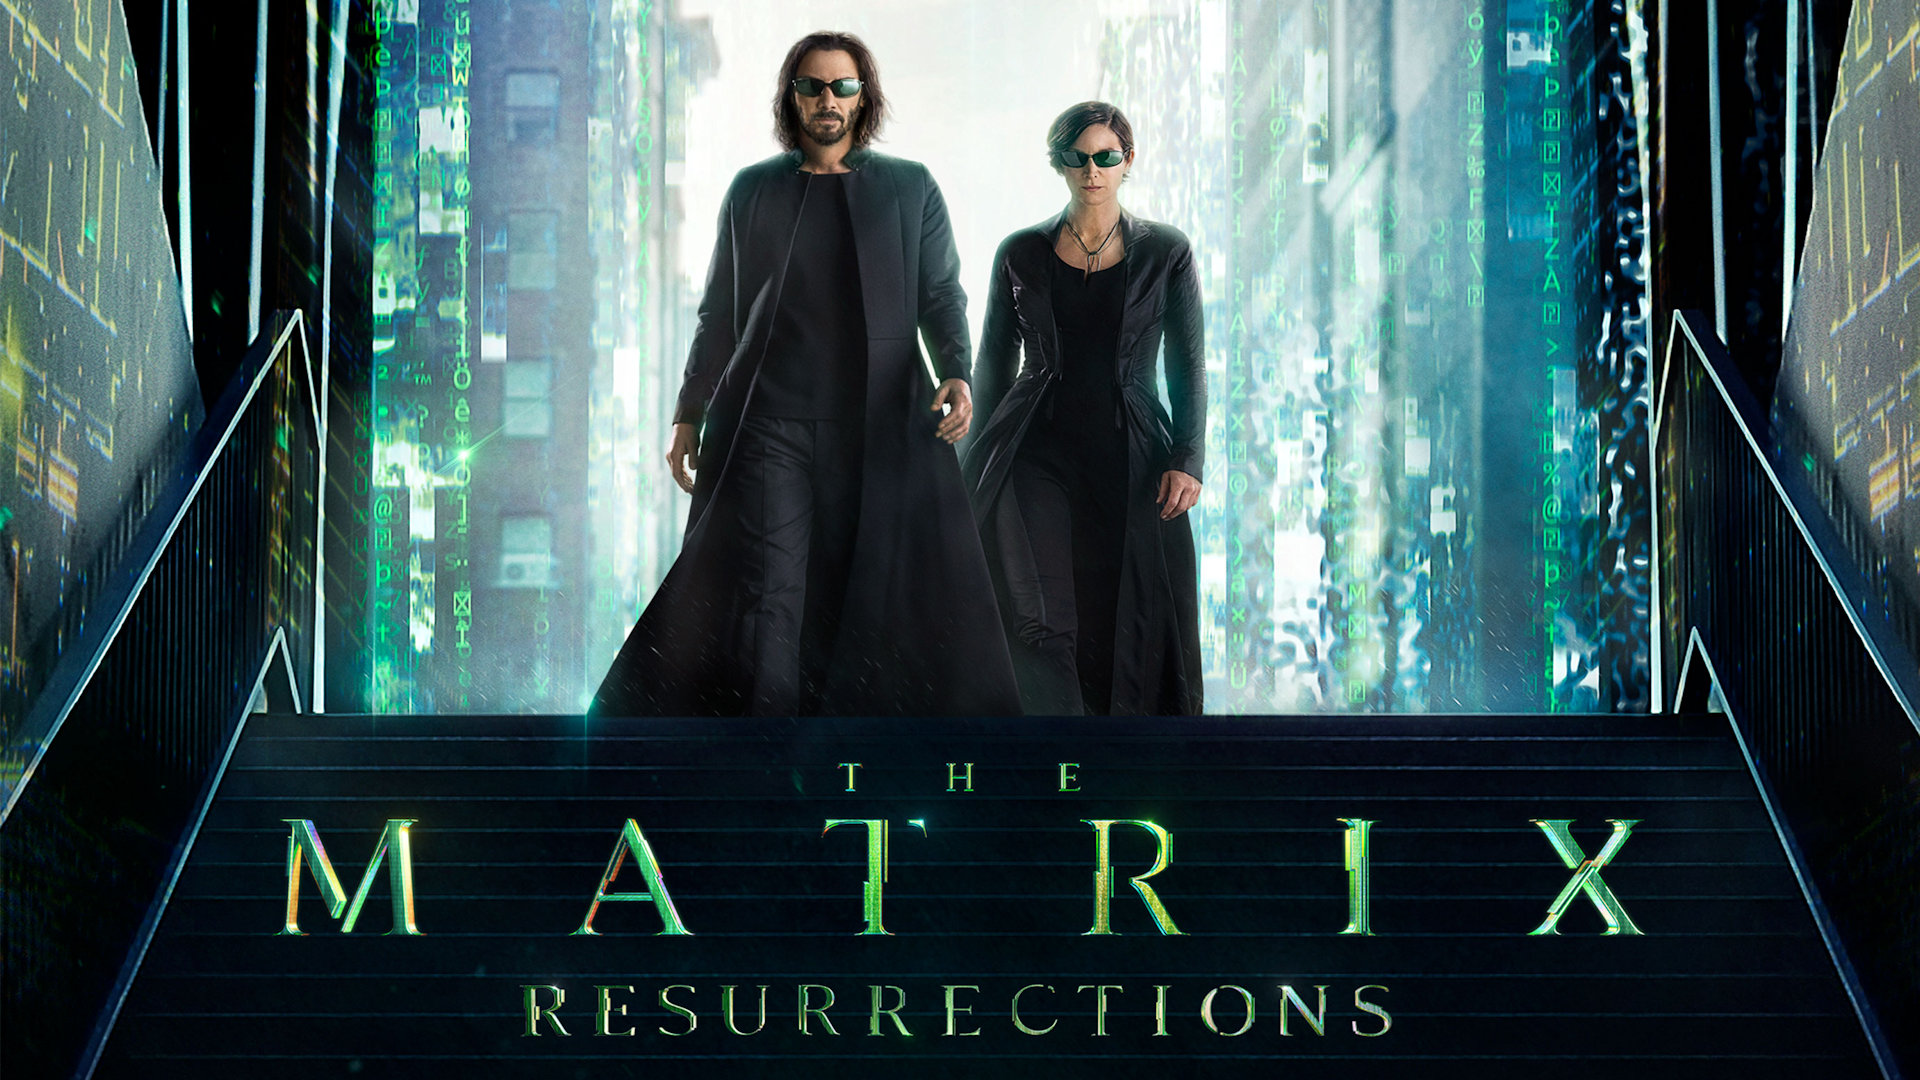 Hd The Matrix Reserructions Poster Wallpapers